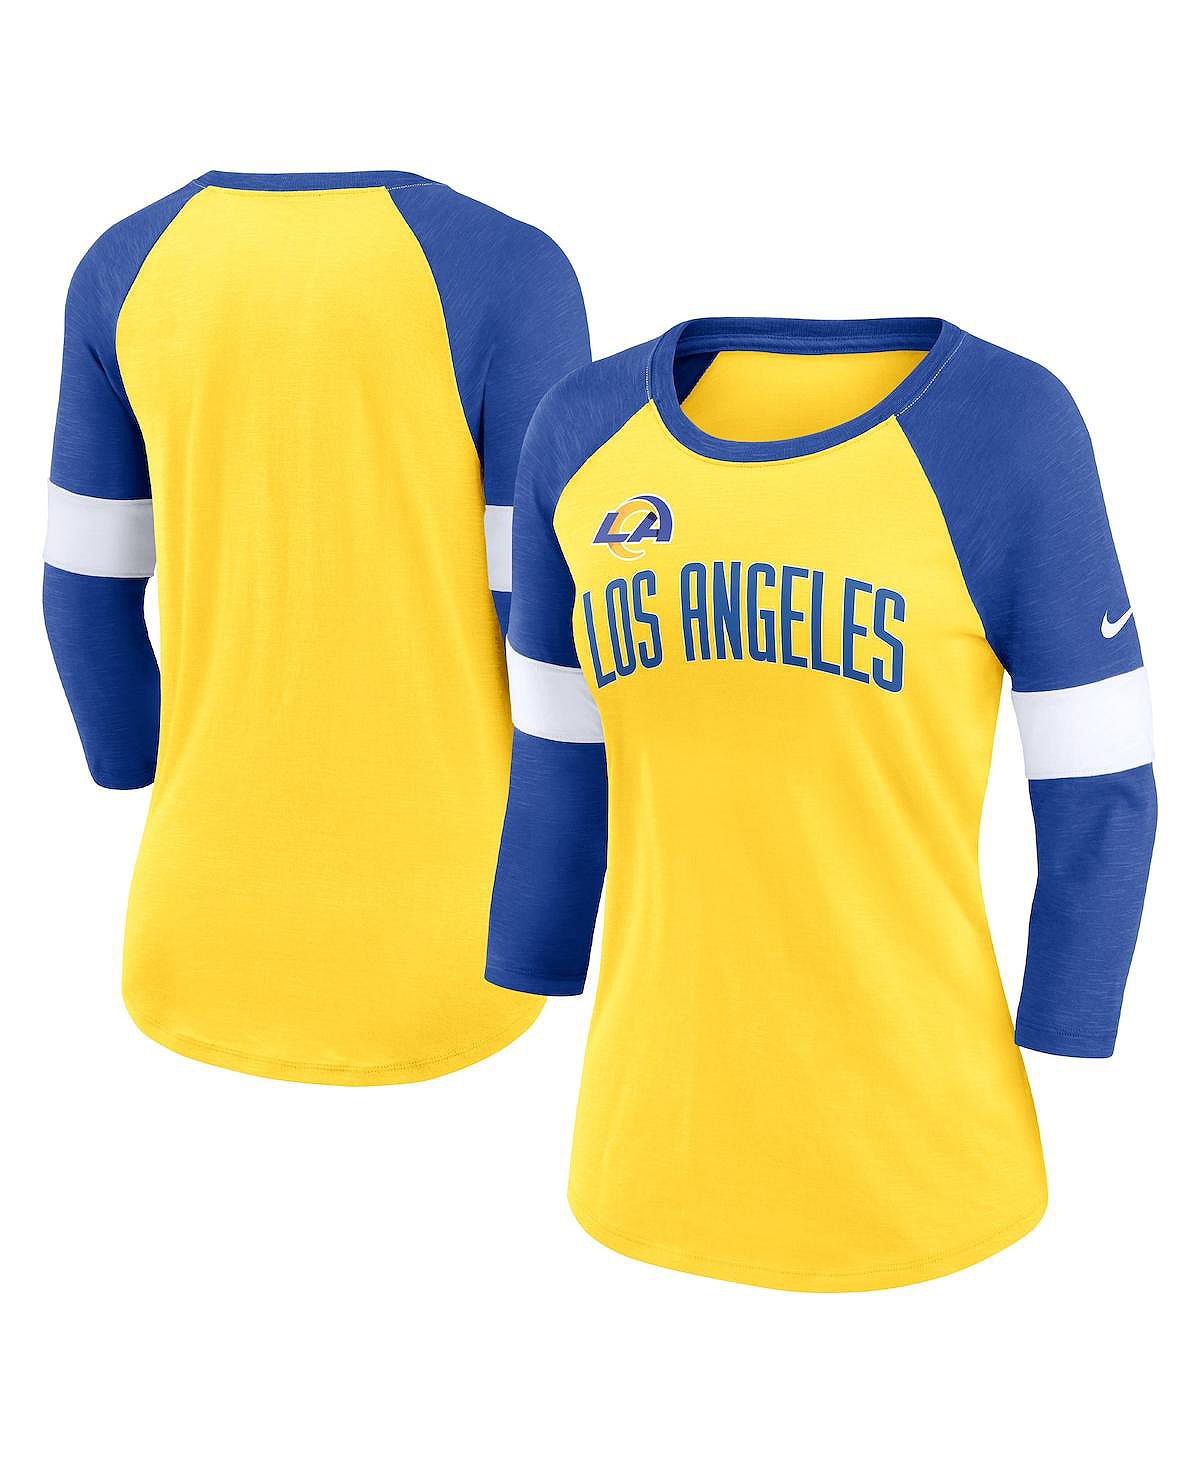 Женская футболка Los Angeles Rams Heather Gold, Heather Royal Football Pride реглан с рукавами 3/4 Nike